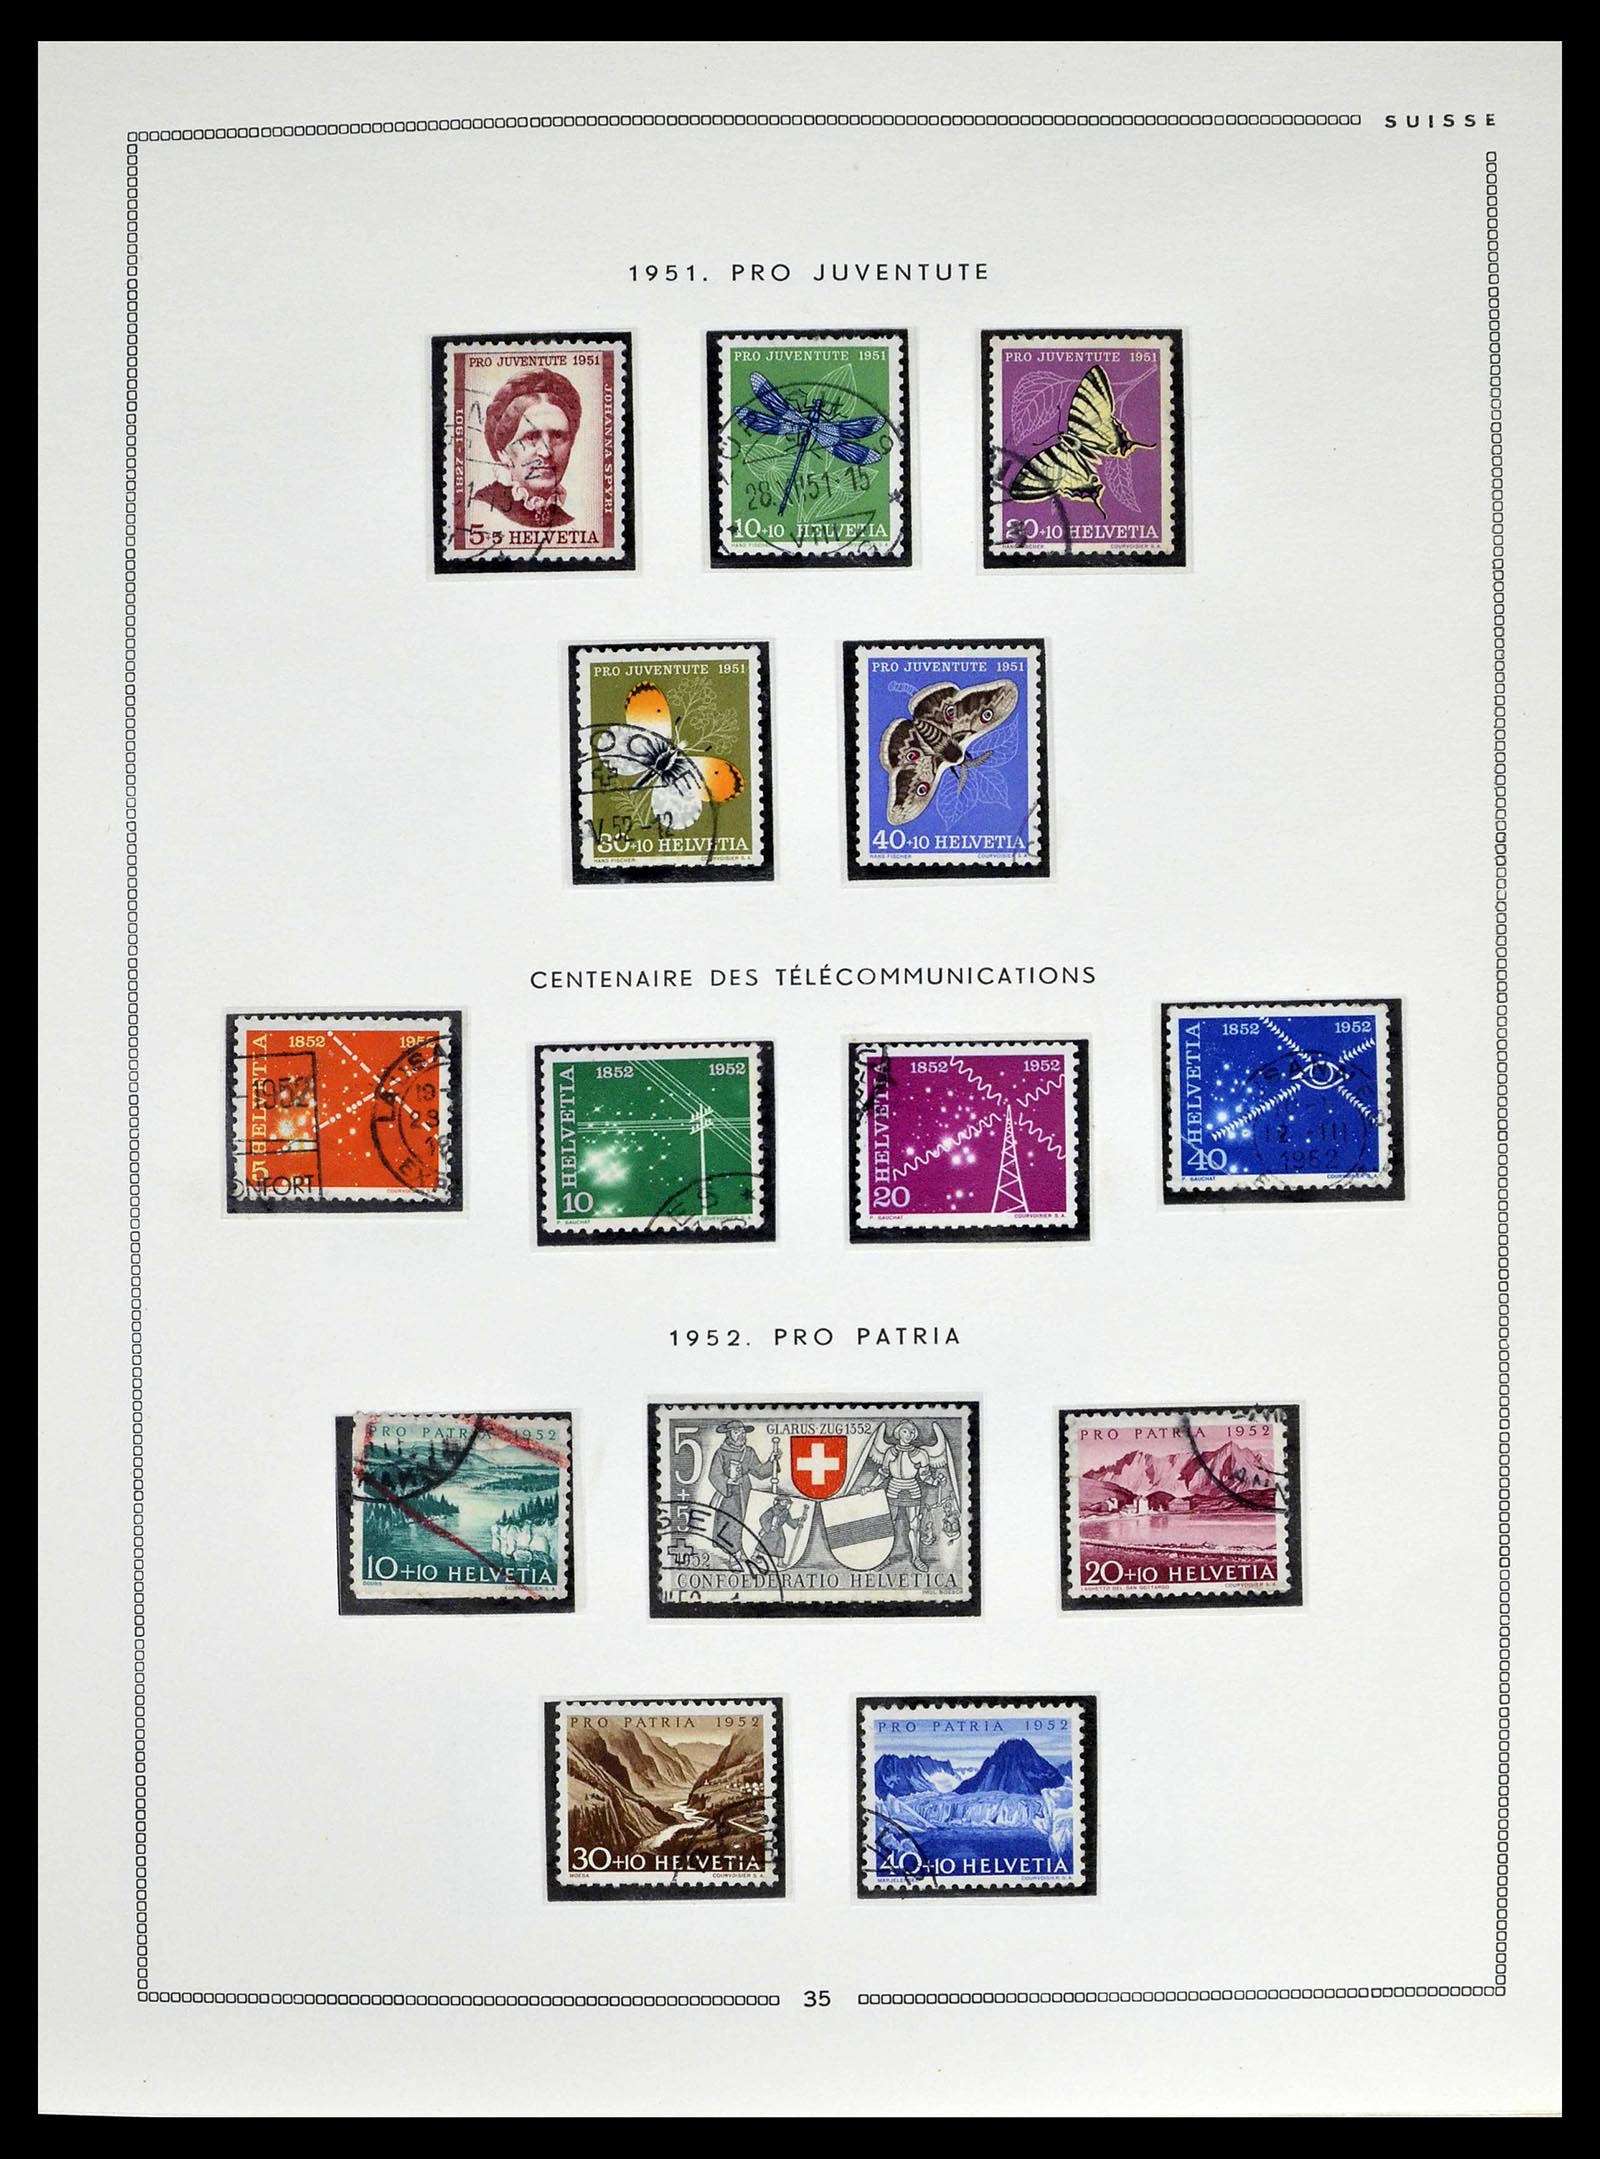 39094 0033 - Stamp collection 39094 Switzerland 1850-2005.